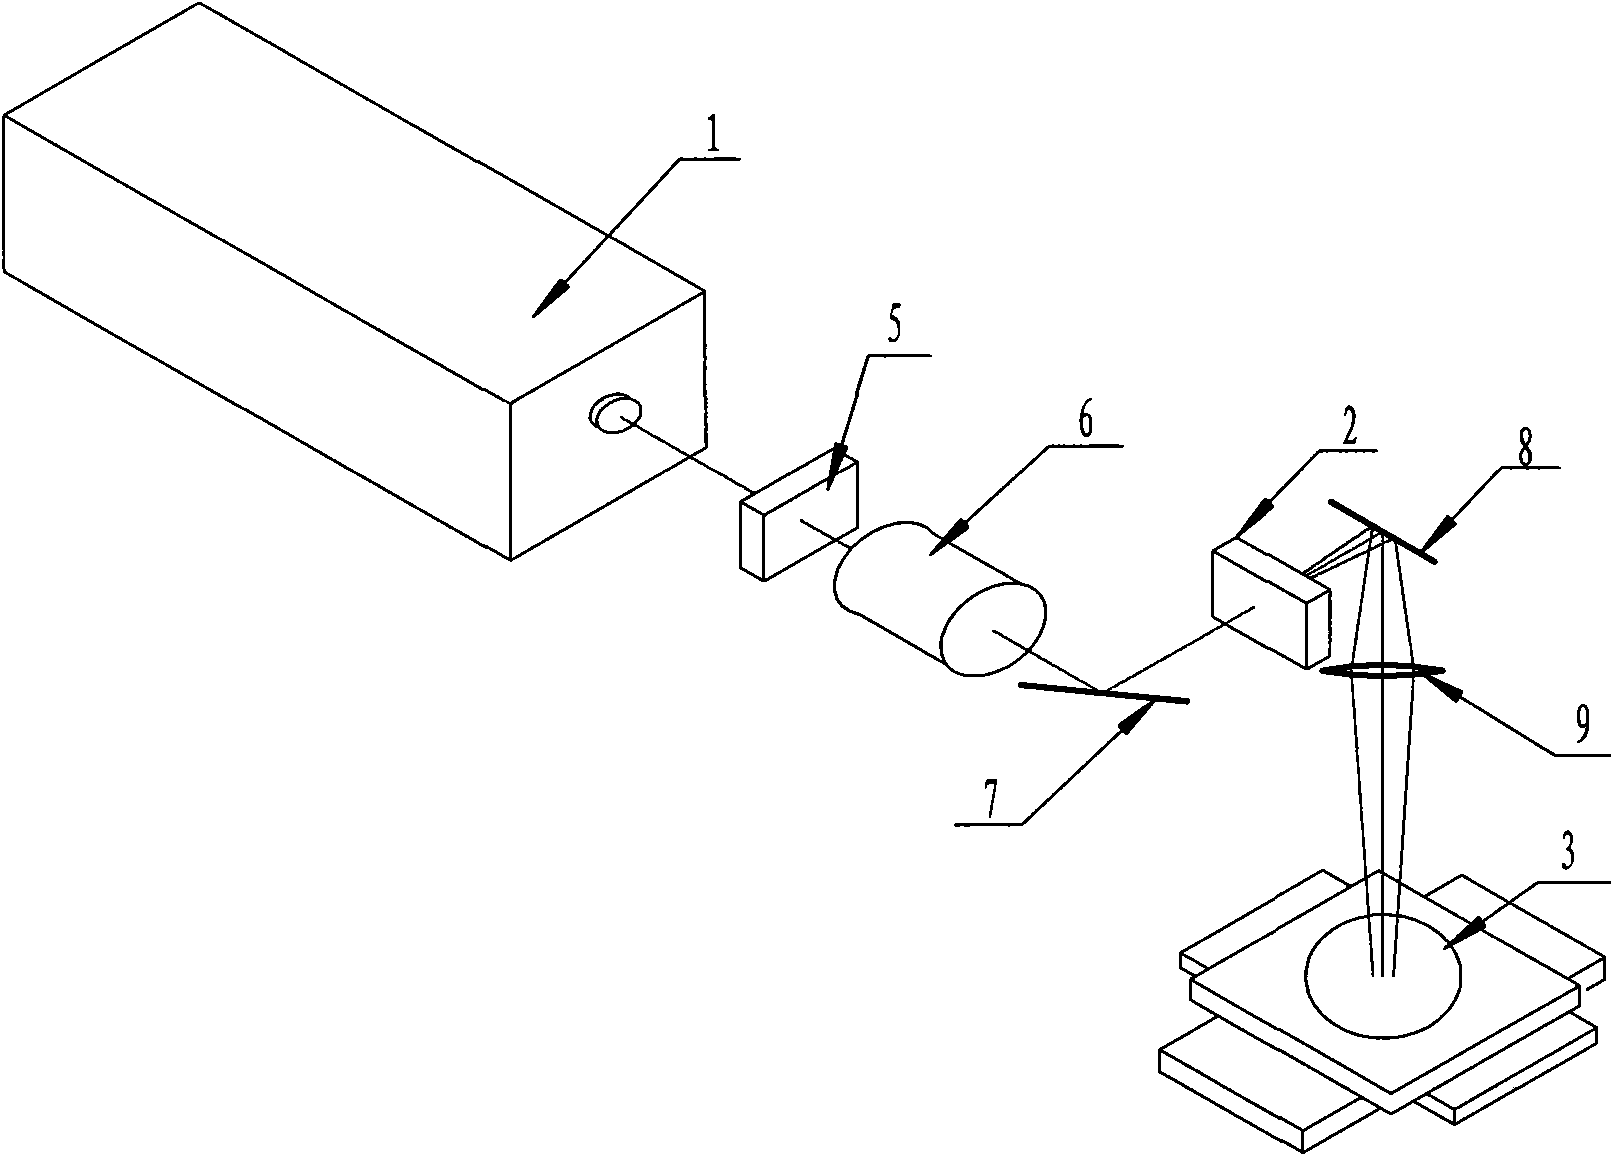 Designing method for LED wafer tri-laser-beam scribing equipment